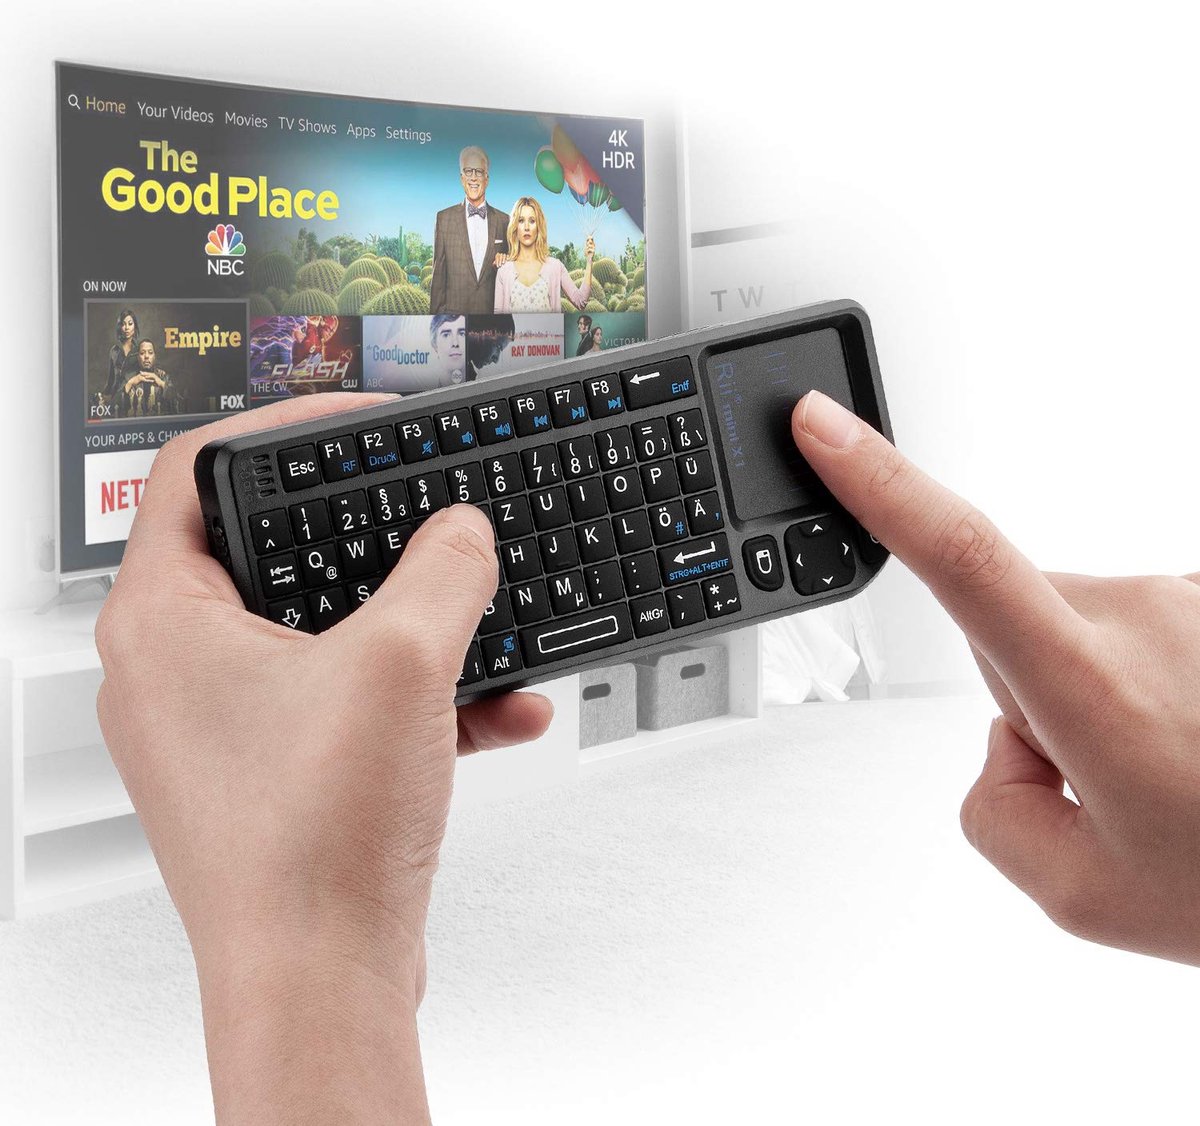 Beroli - Rii X1 Draadloos Mini-Toetsenbord - Smart TV-Toetsenbord - DE Lay-Out - Draadloos Toetsenbord met Touchpad - Mini-Toetsenbord voor Smart TV Afstandsbediening/PC/PAD/Xbox 360/PS3/Google Android TV Box/HTPC/IPTV